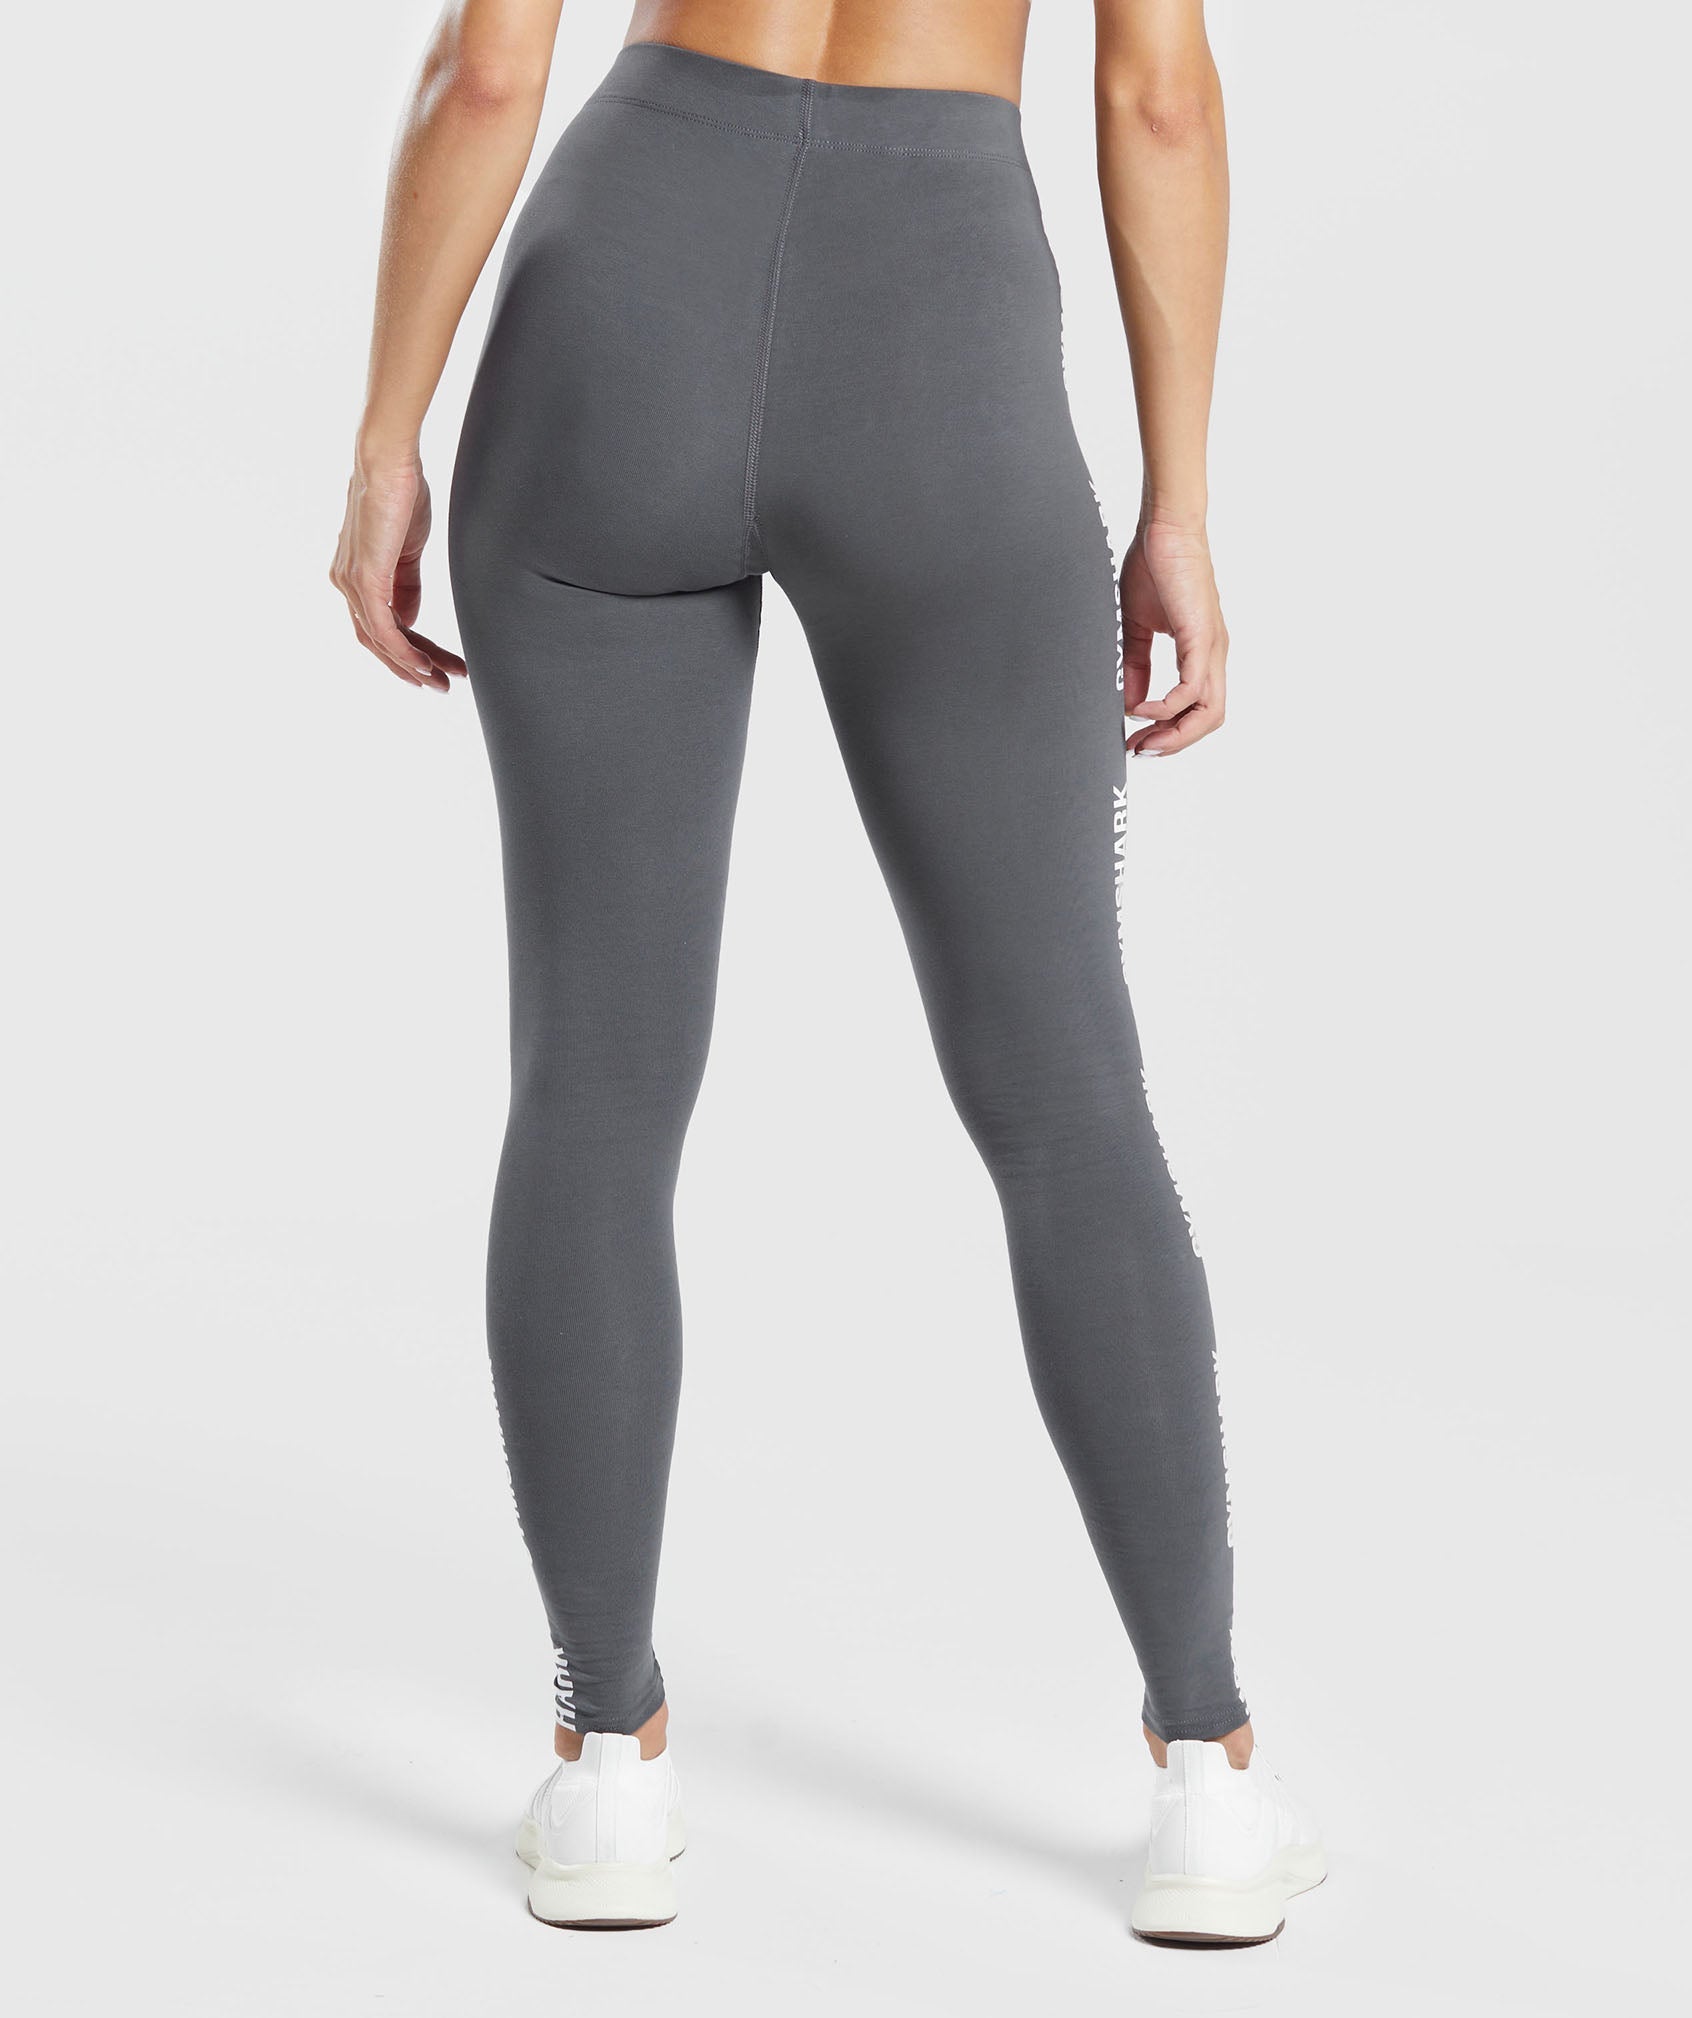 Textured Gym/Yoga Leggings - Gray/Grey to White Fade ⭐ Leggings